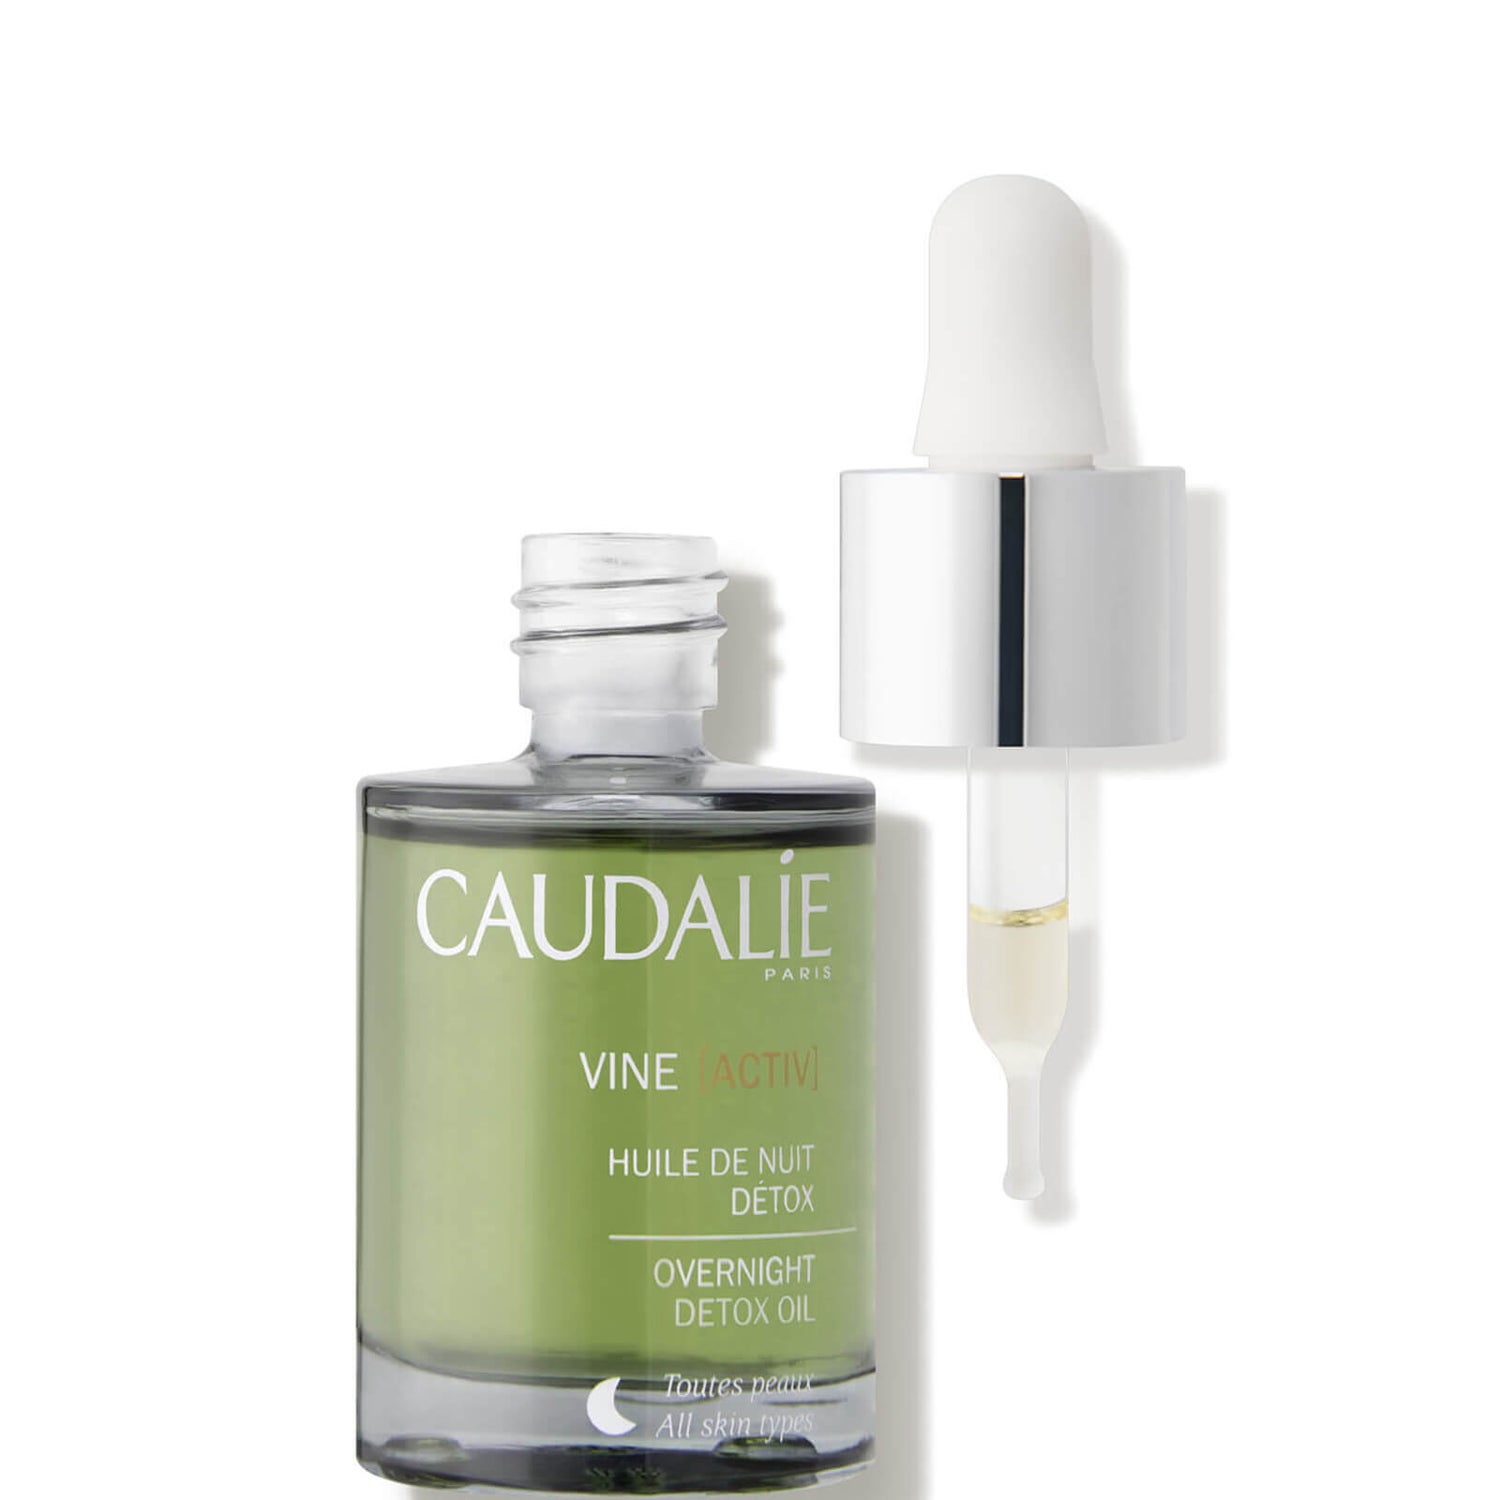 Caudalie VineActiv Overnight Detox Oil (1 fl. oz.)